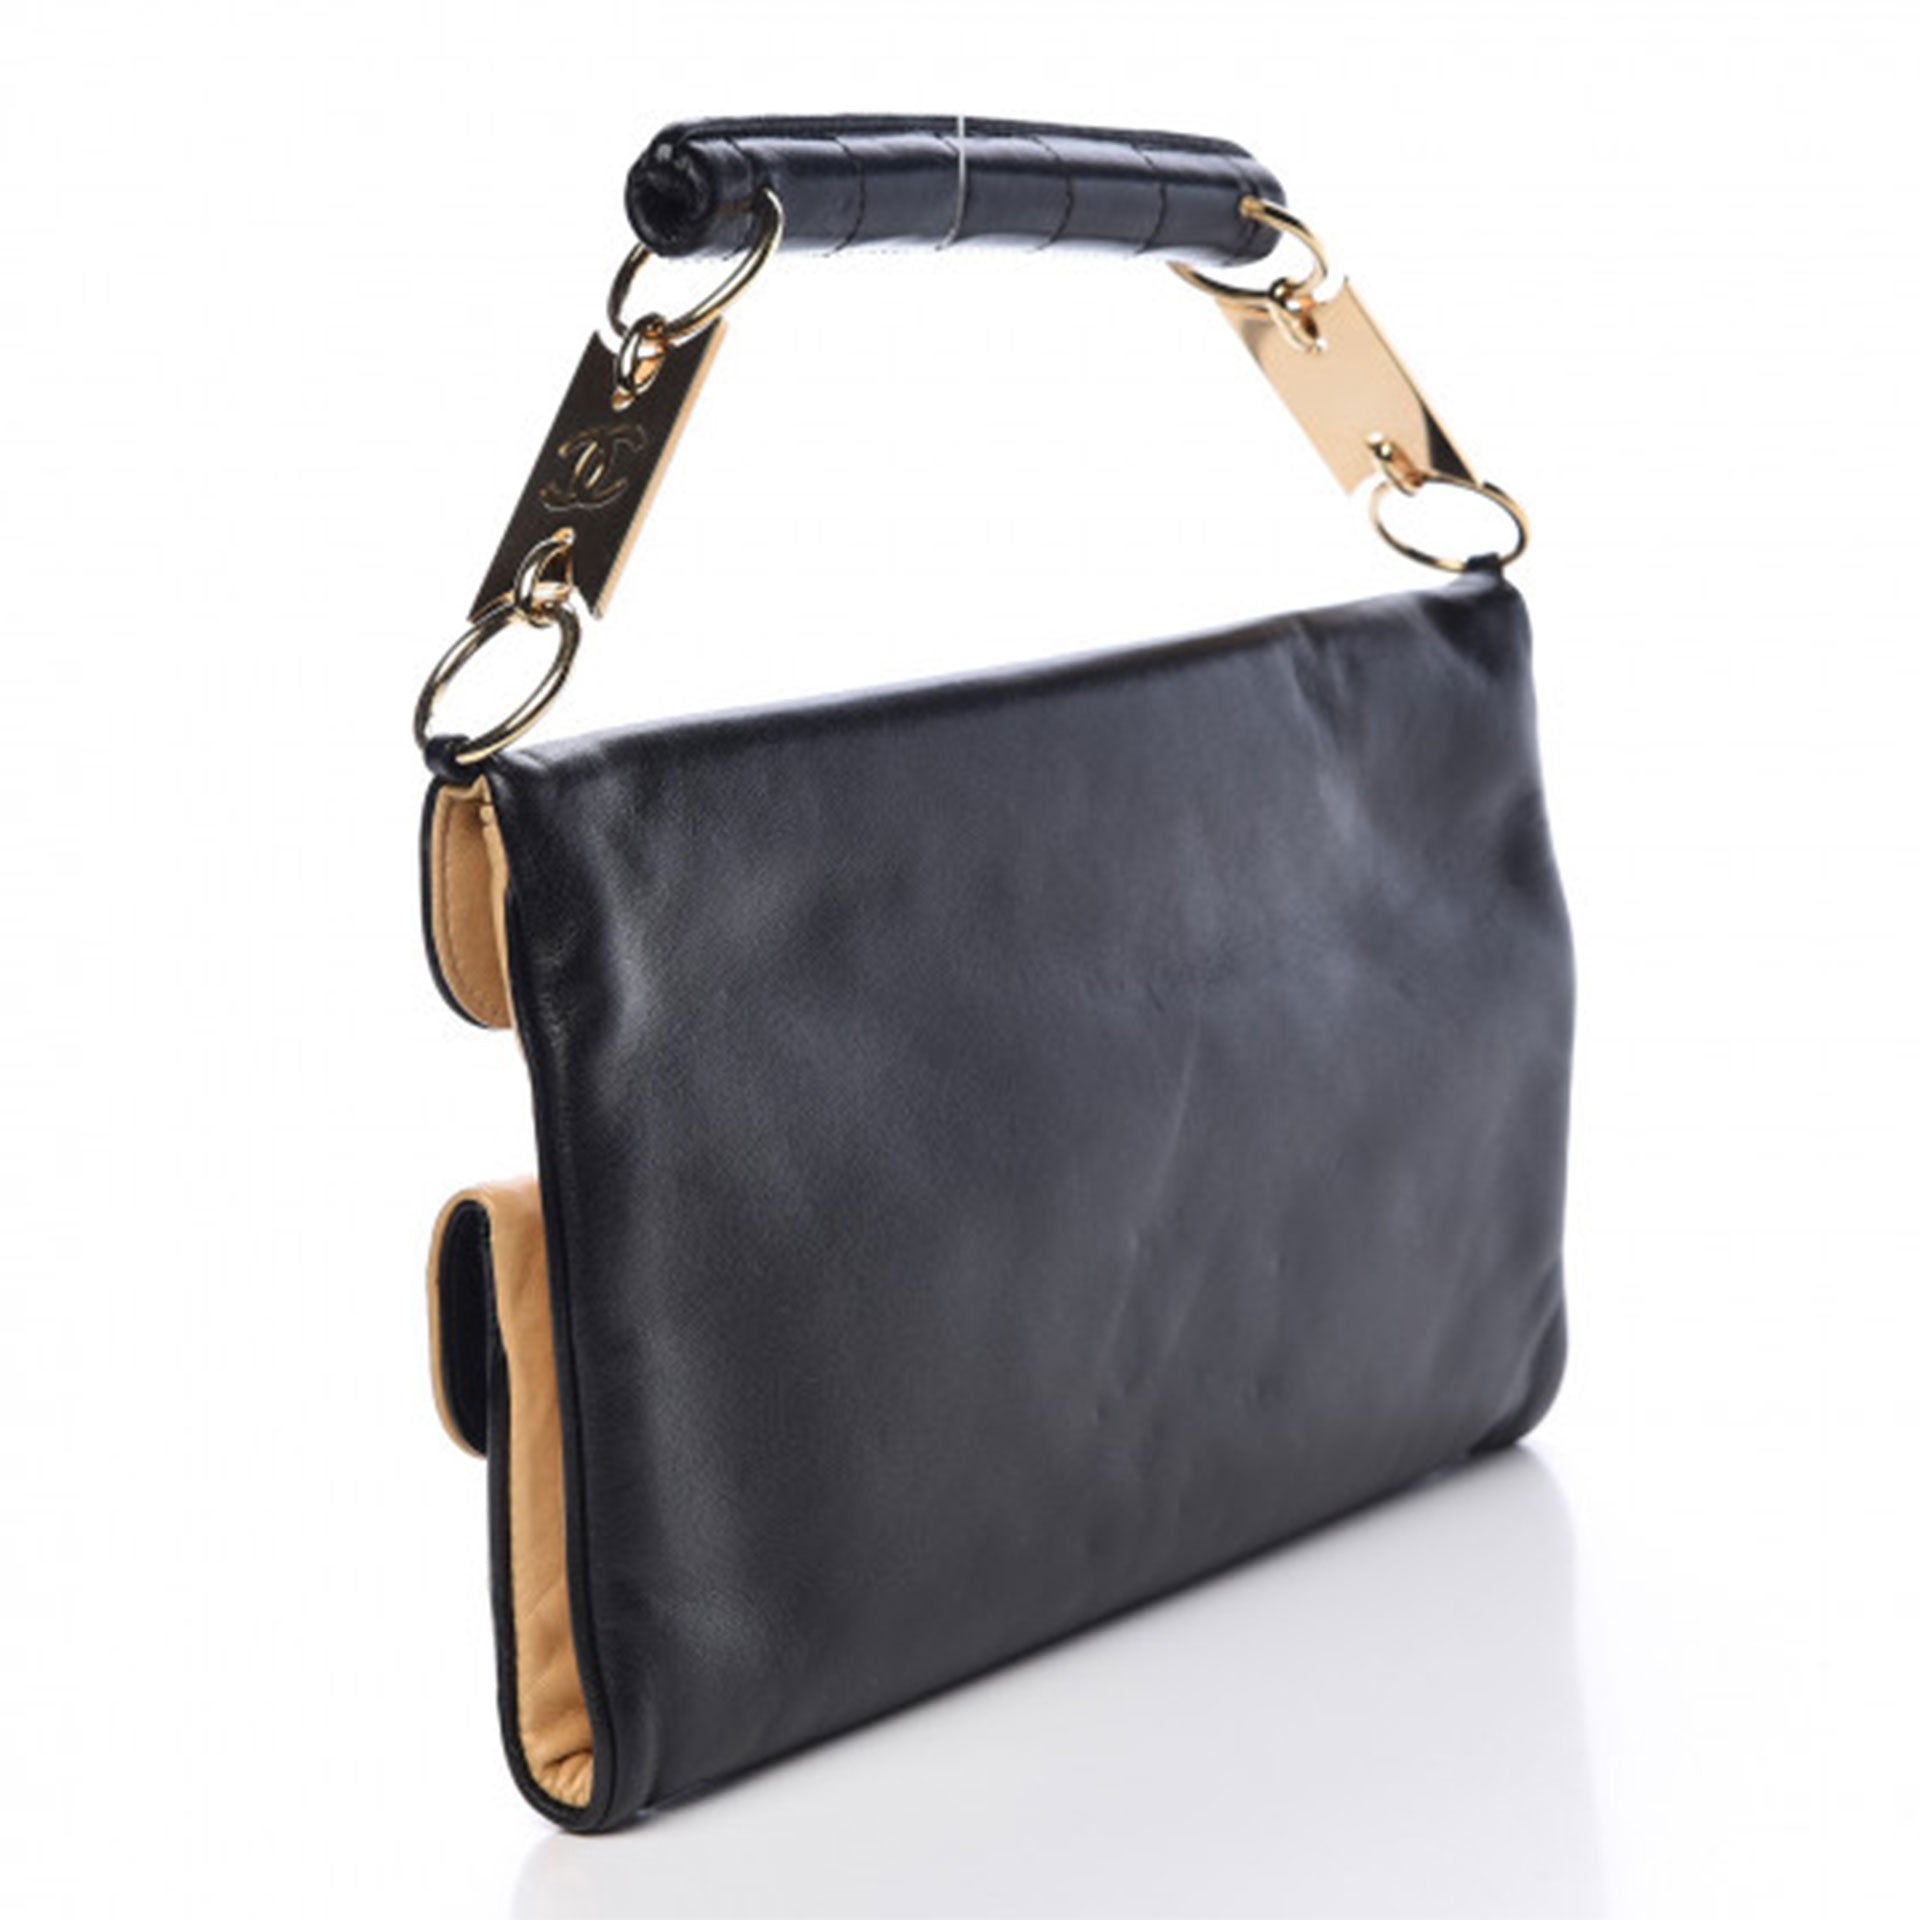 Chanel Silver Mini Reissue Crossbody Bag